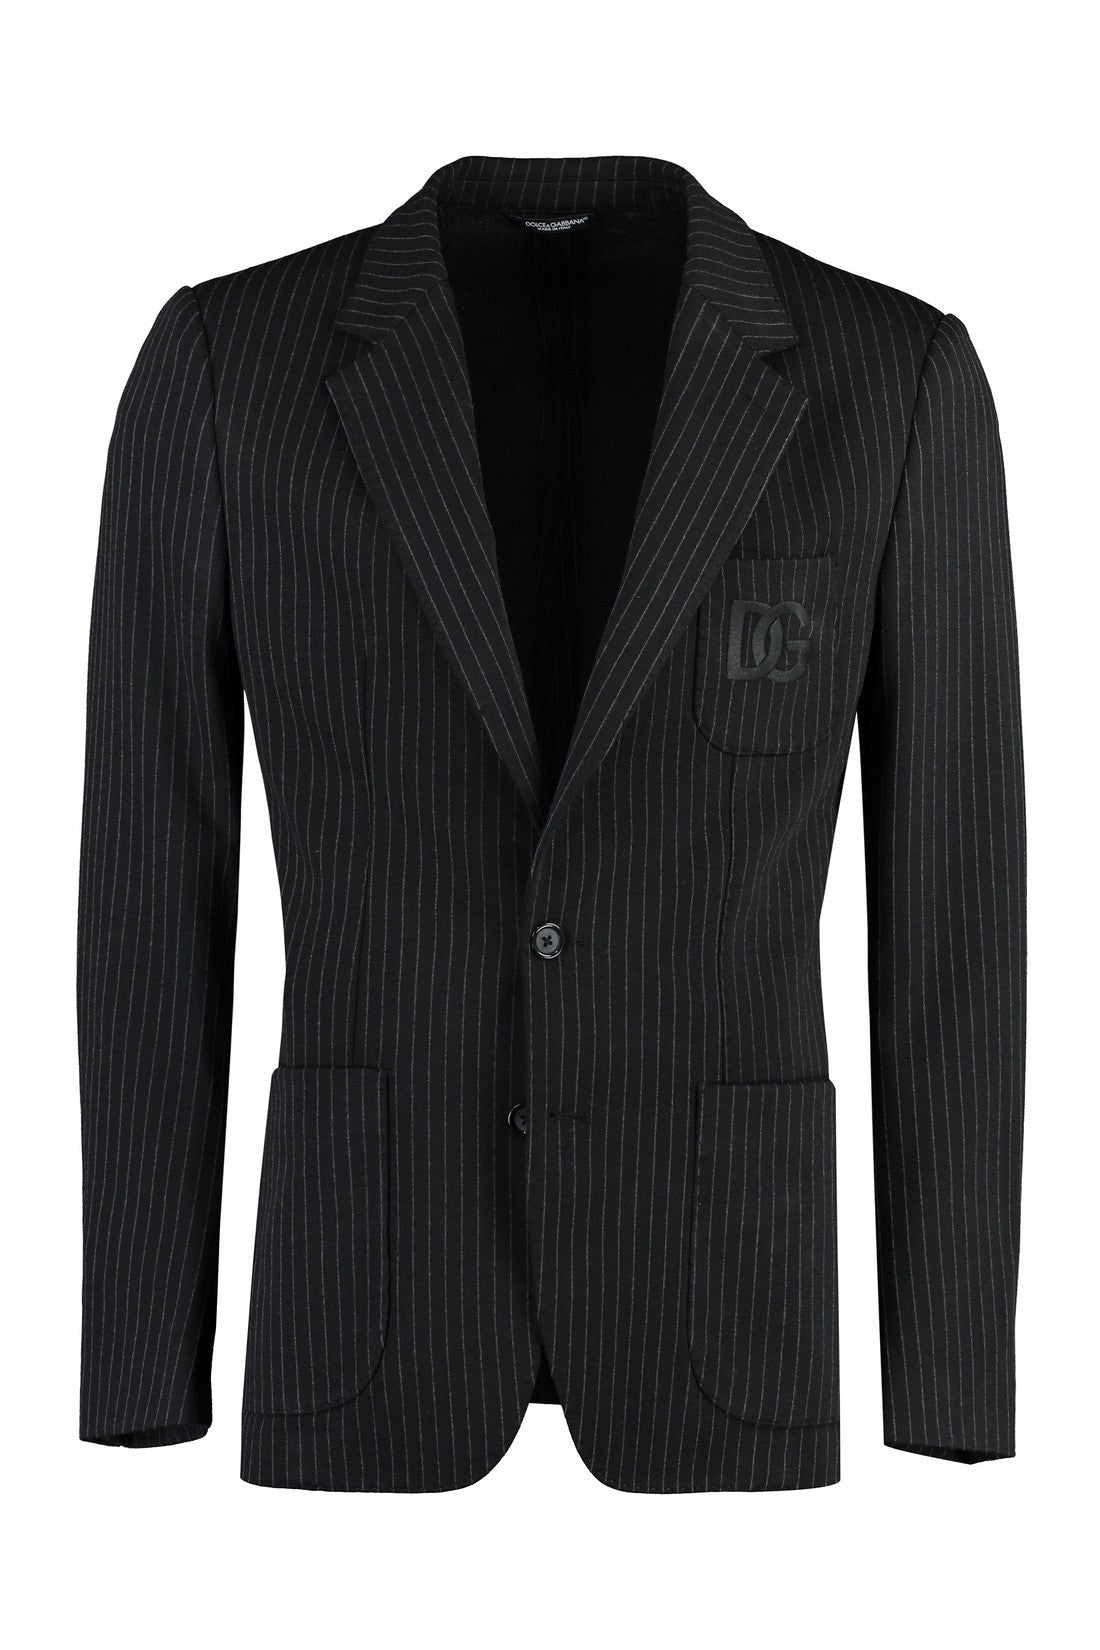 Dolce & Gabbana-OUTLET-SALE-Portofino single-breasted two-button jacket-ARCHIVIST